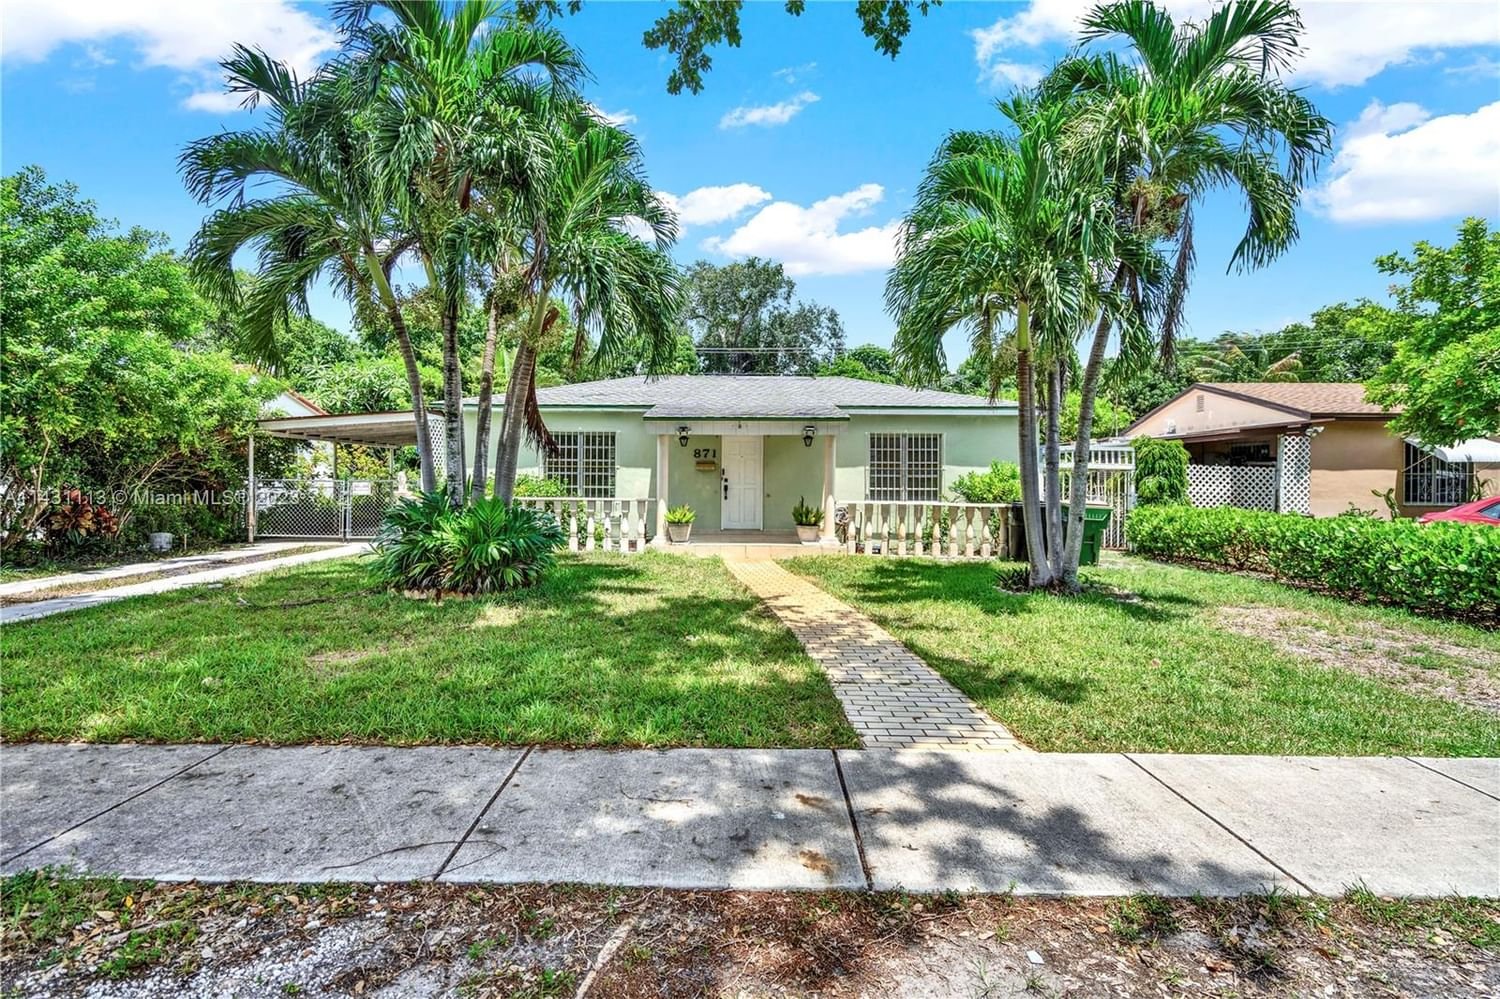 Real estate property located at 871 128th St, Miami-Dade County, North Miami, FL